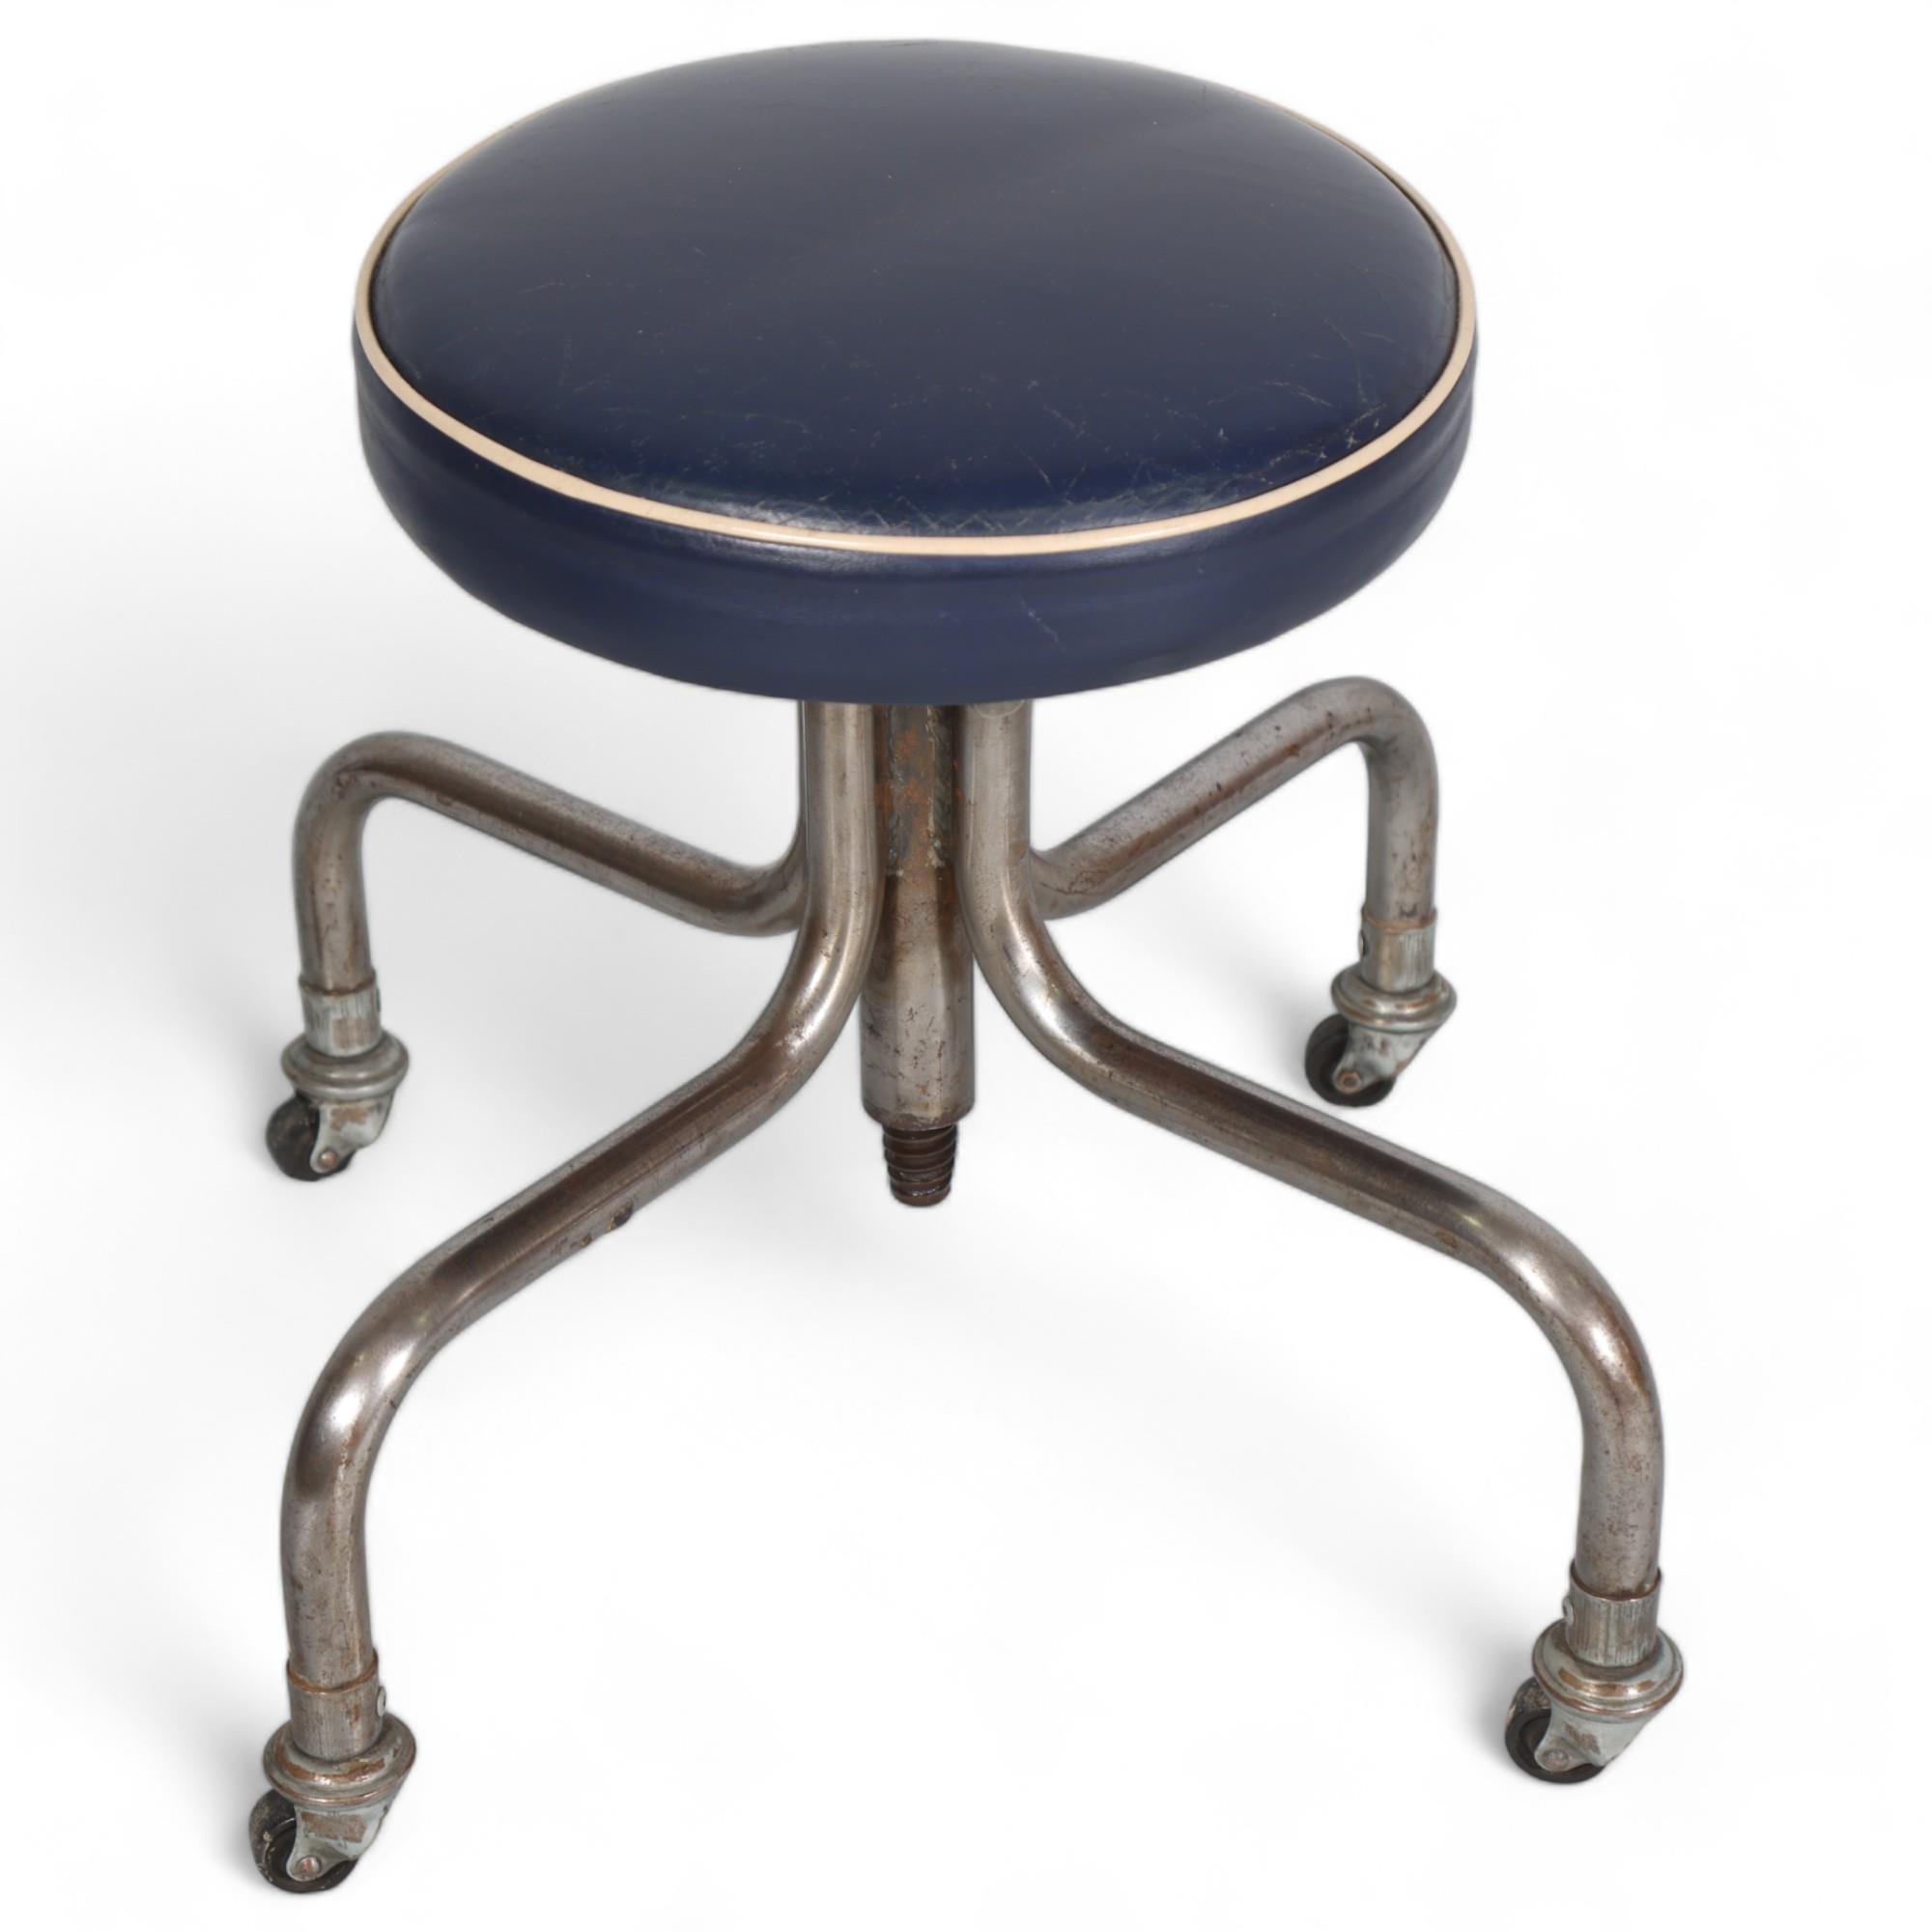 A mid-century modernist tubular steel industrial height adjustable stool with blue leather seat,